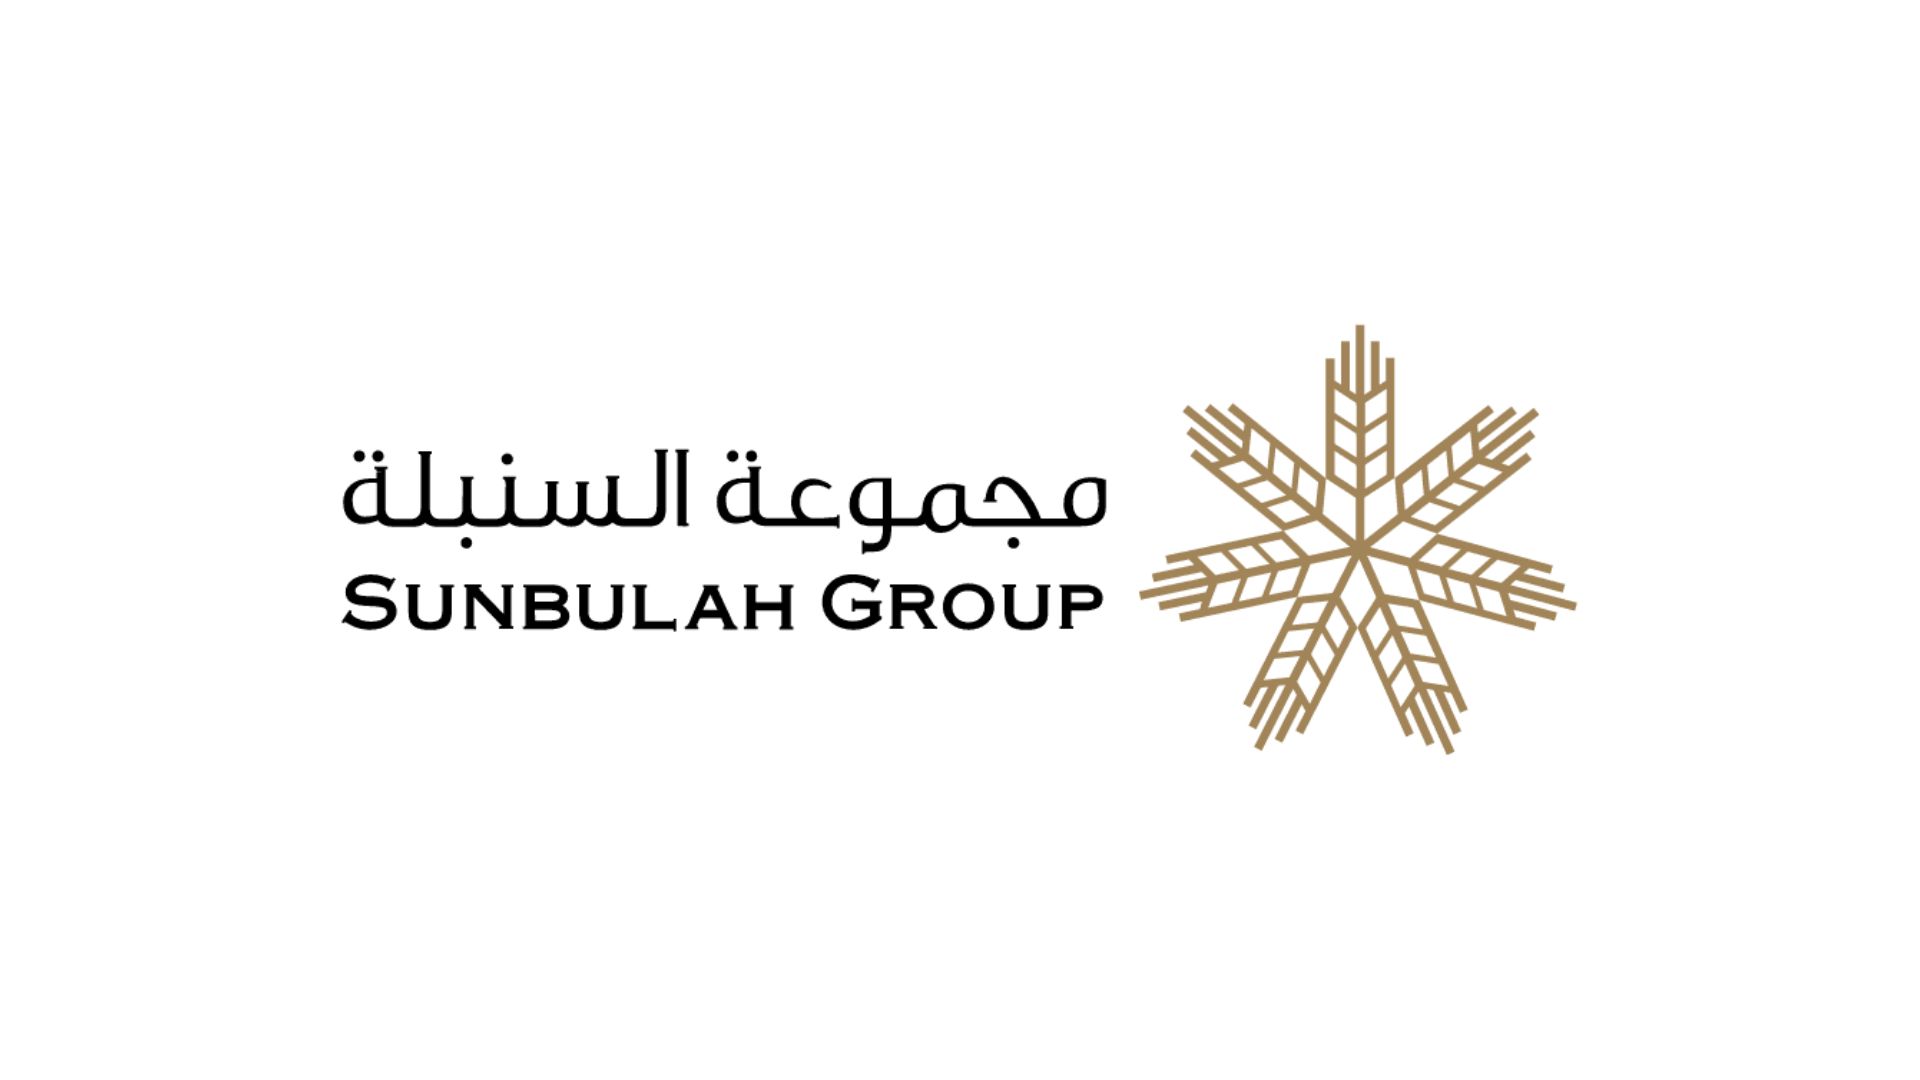 Sunbullah Group